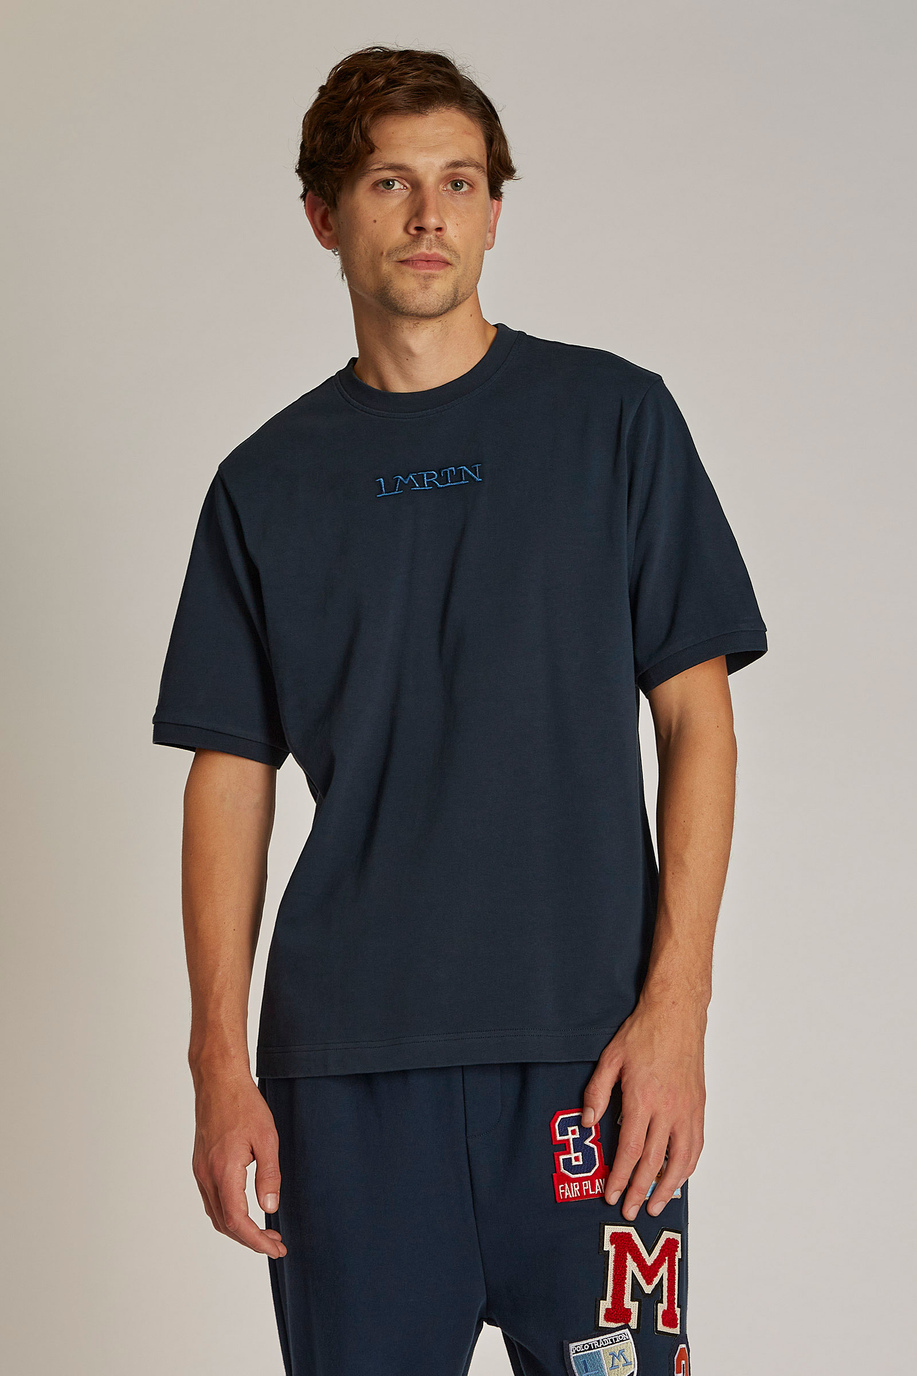 Camiseta de hombre de algodón de manga corta, modelo oversize - Camisetas | La Martina - Official Online Shop